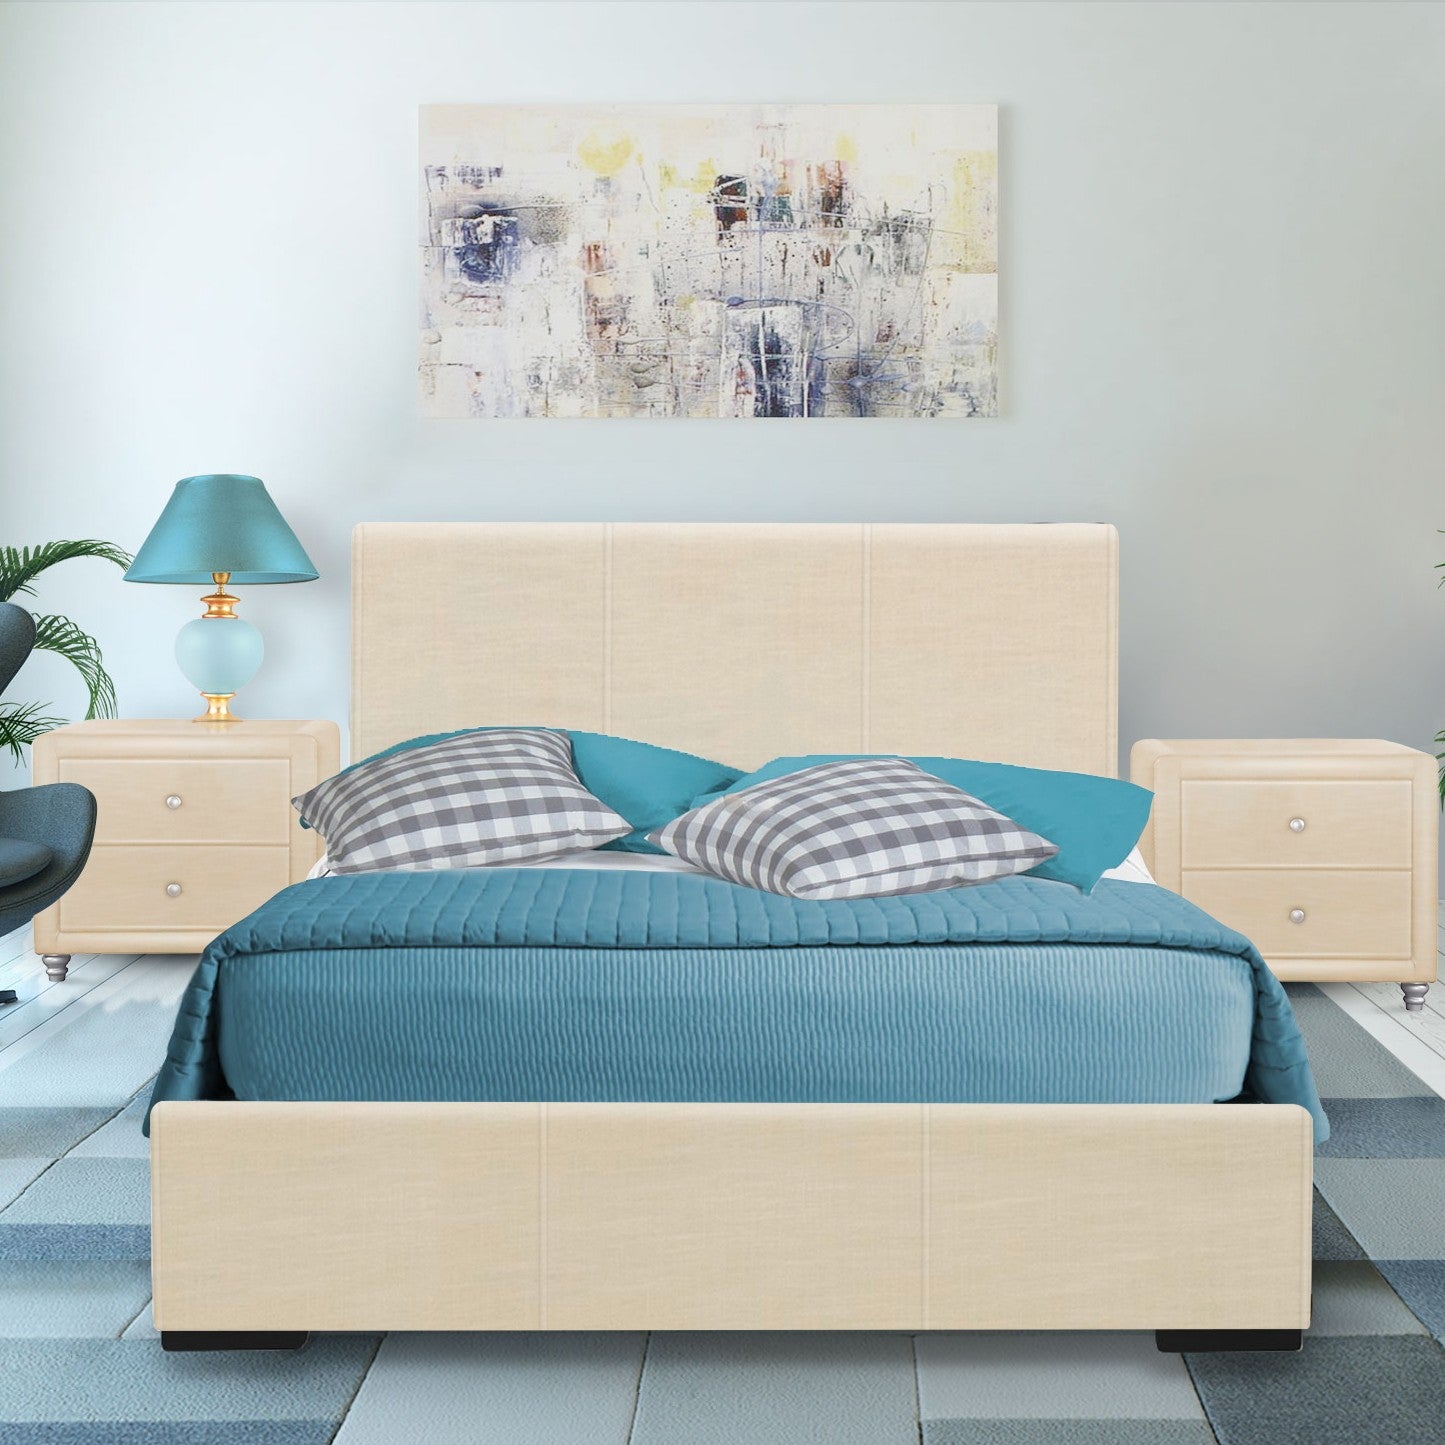 Beige Upholstered Platform King Bed with Two Nightstands Default Title